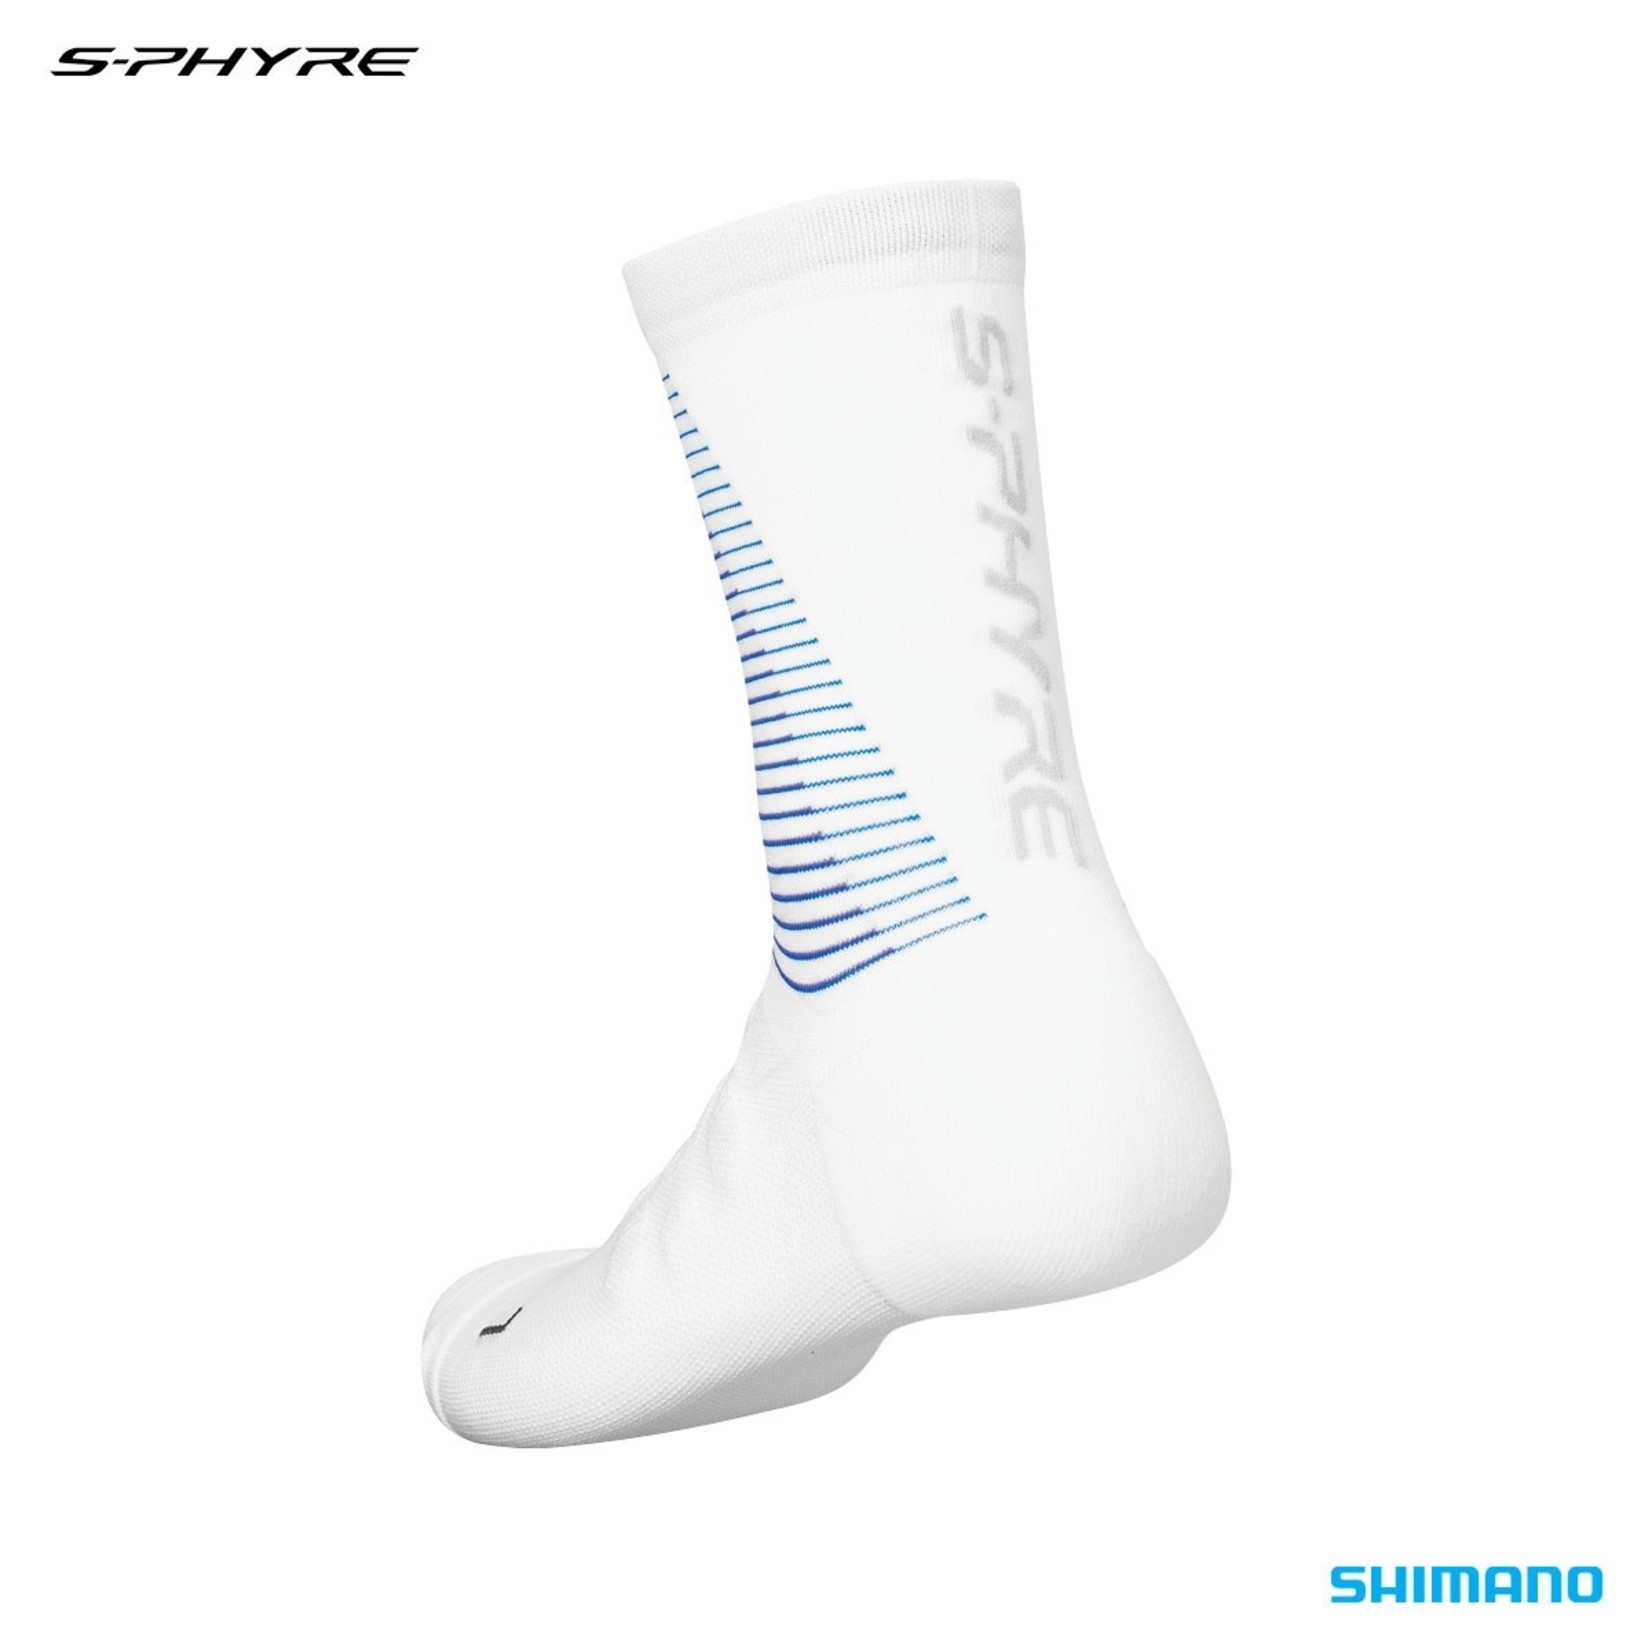 Shimano Shimano S-Phyre Tall Socks - White Purple